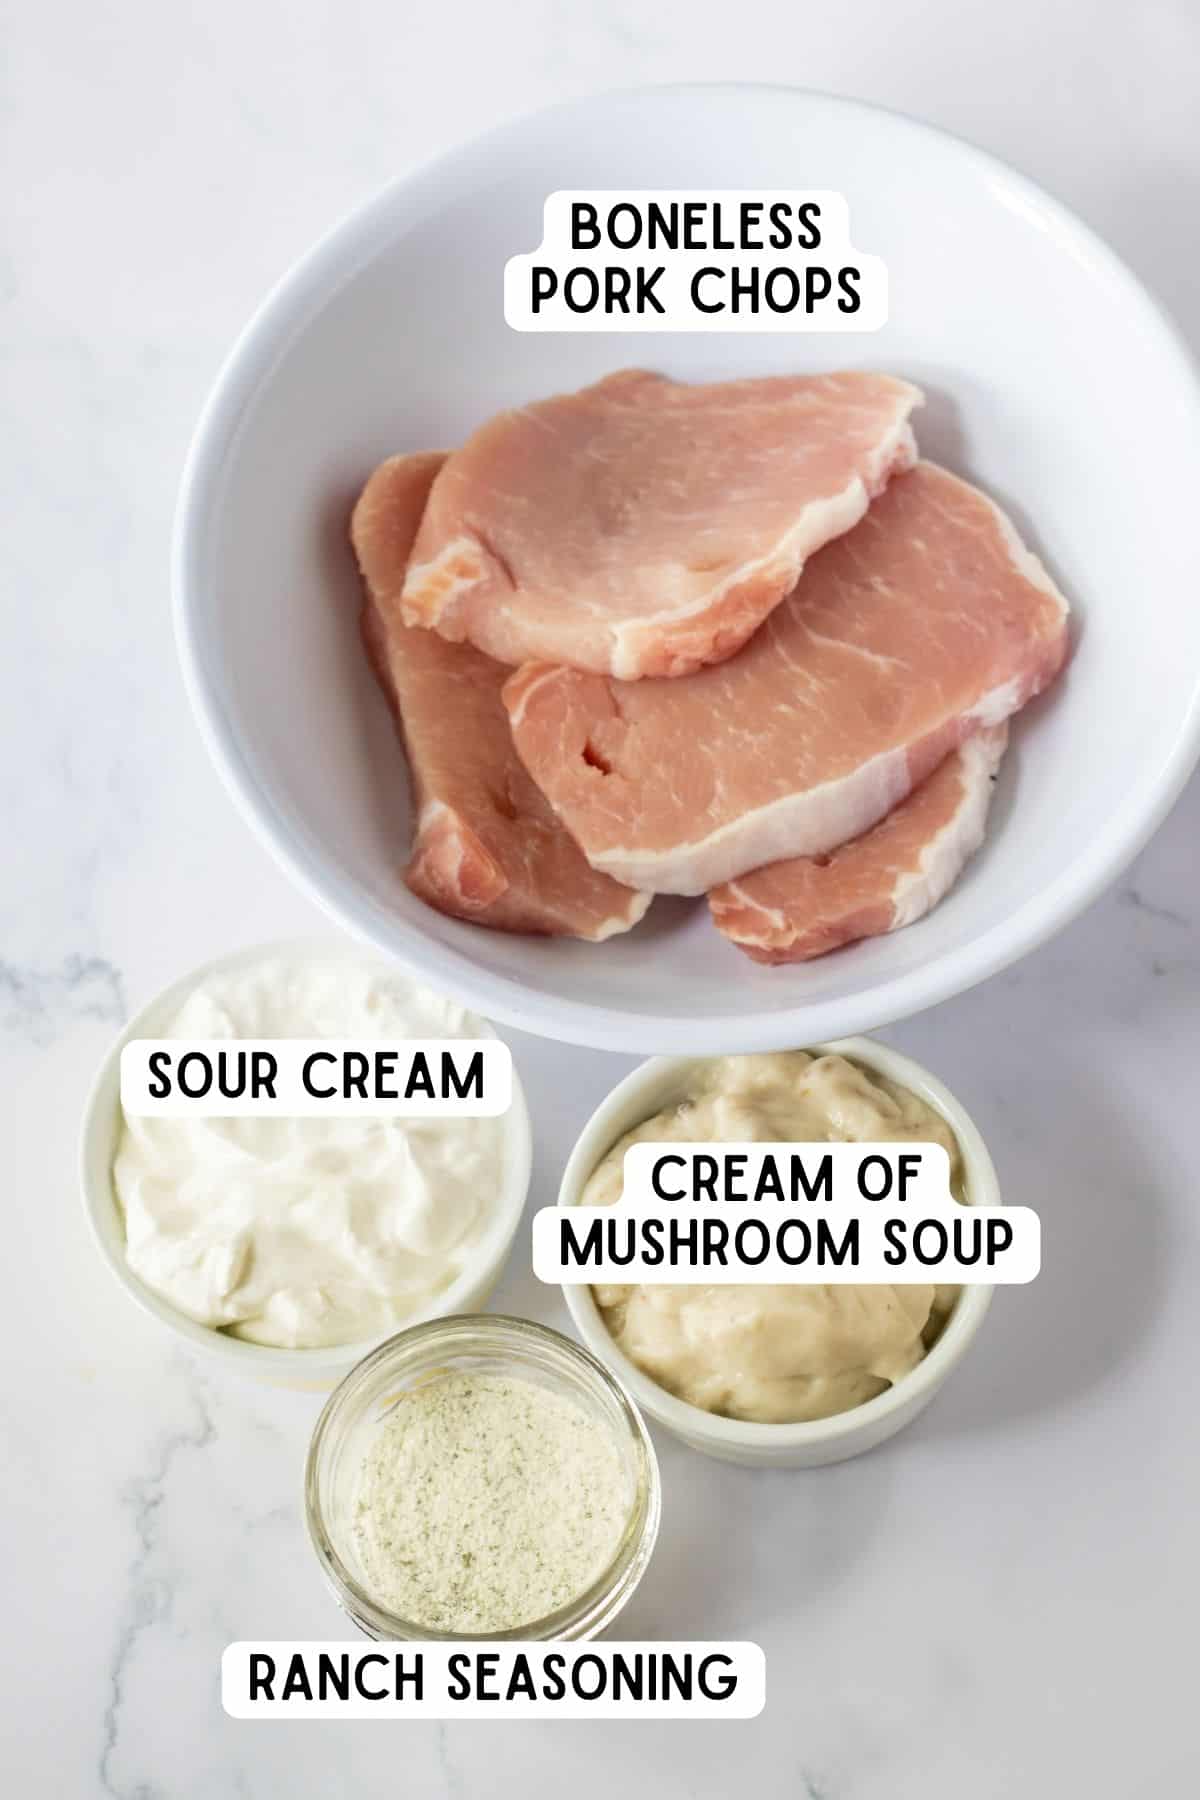 4 Ingredient Pork Chop Ingredients: boneless pork chop, sour cream, cream of mushroom soup, and ranch seasoning.